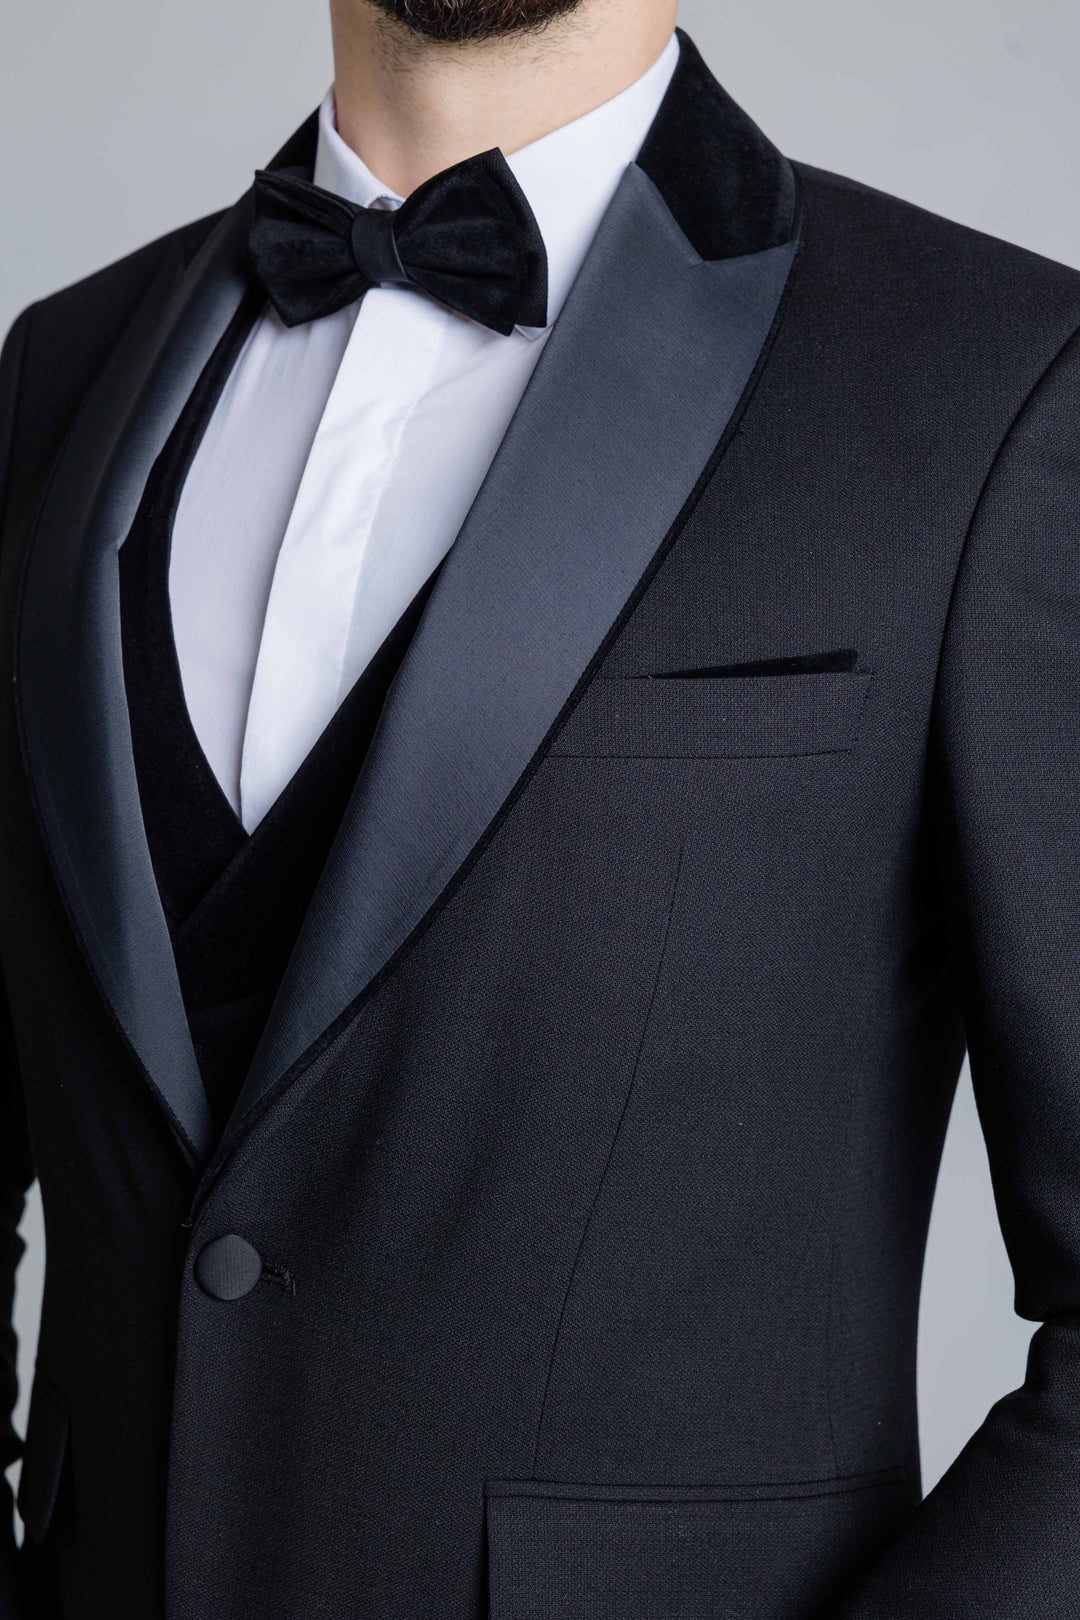 Black tuxedo with velor lapels